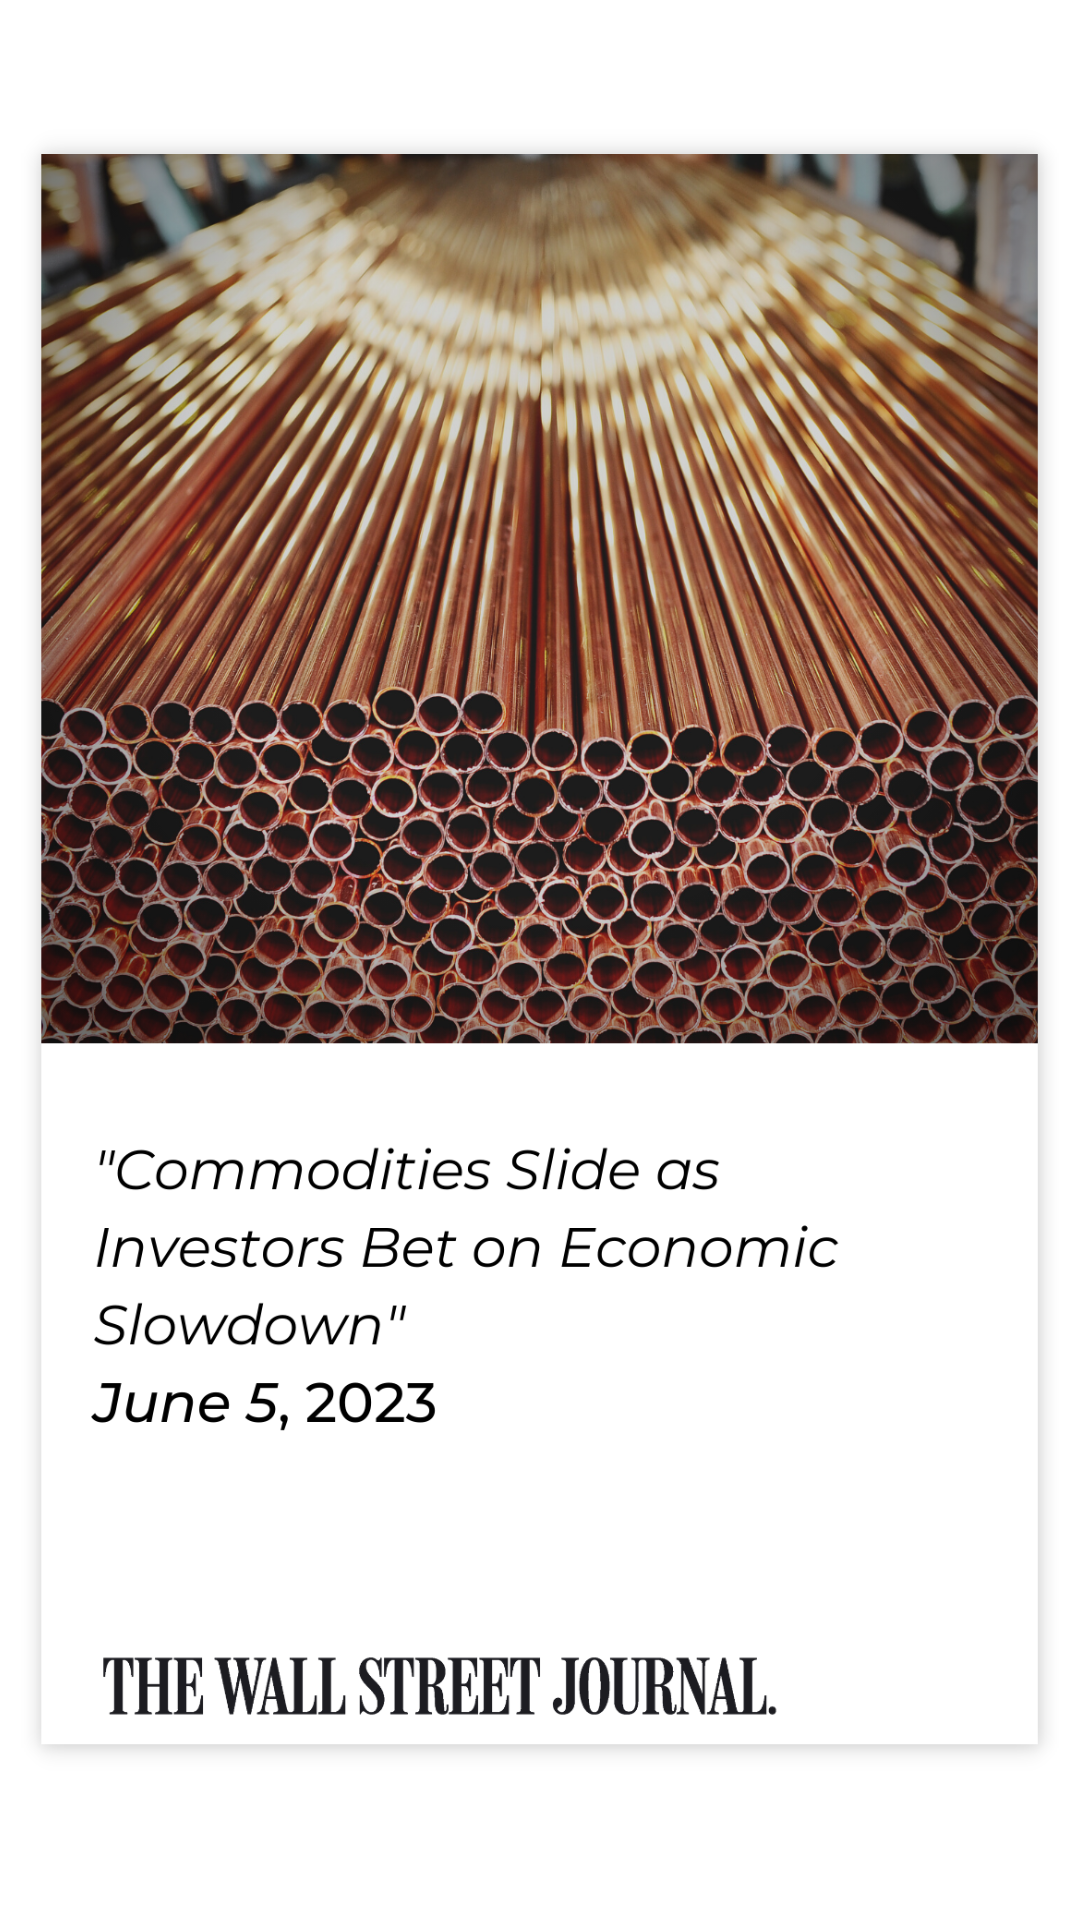 Commodities Slide as Investors Bet on Economic Slowdown